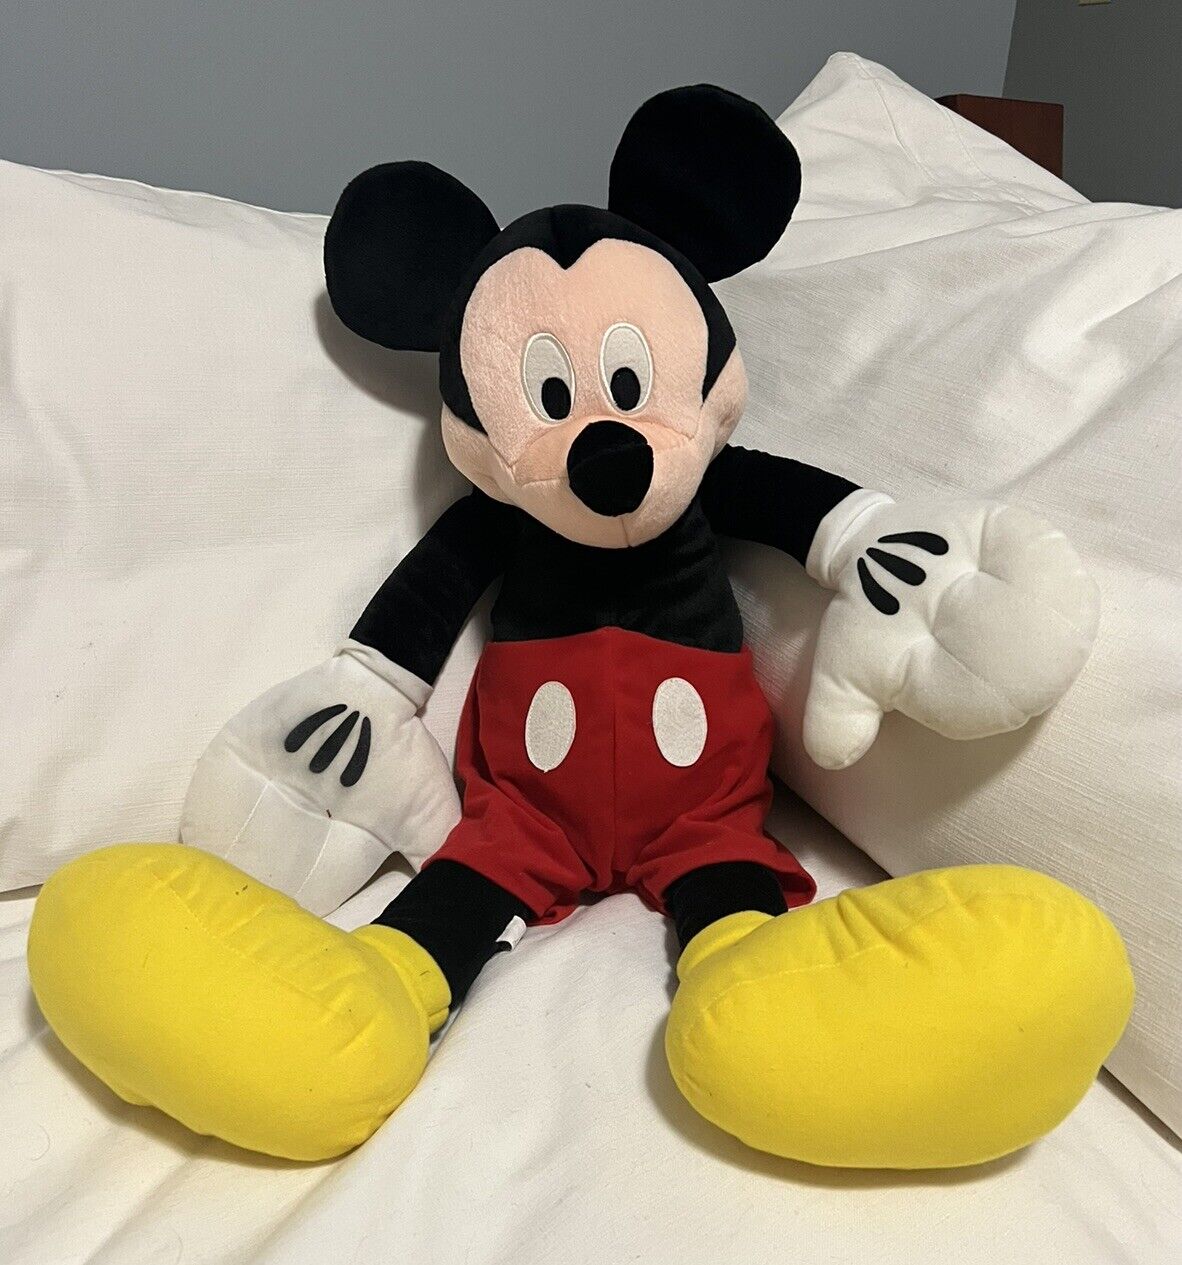 ❤️Mickey Mouse Plush – Large 29 In Tall - Disney Very Nice Big Plush